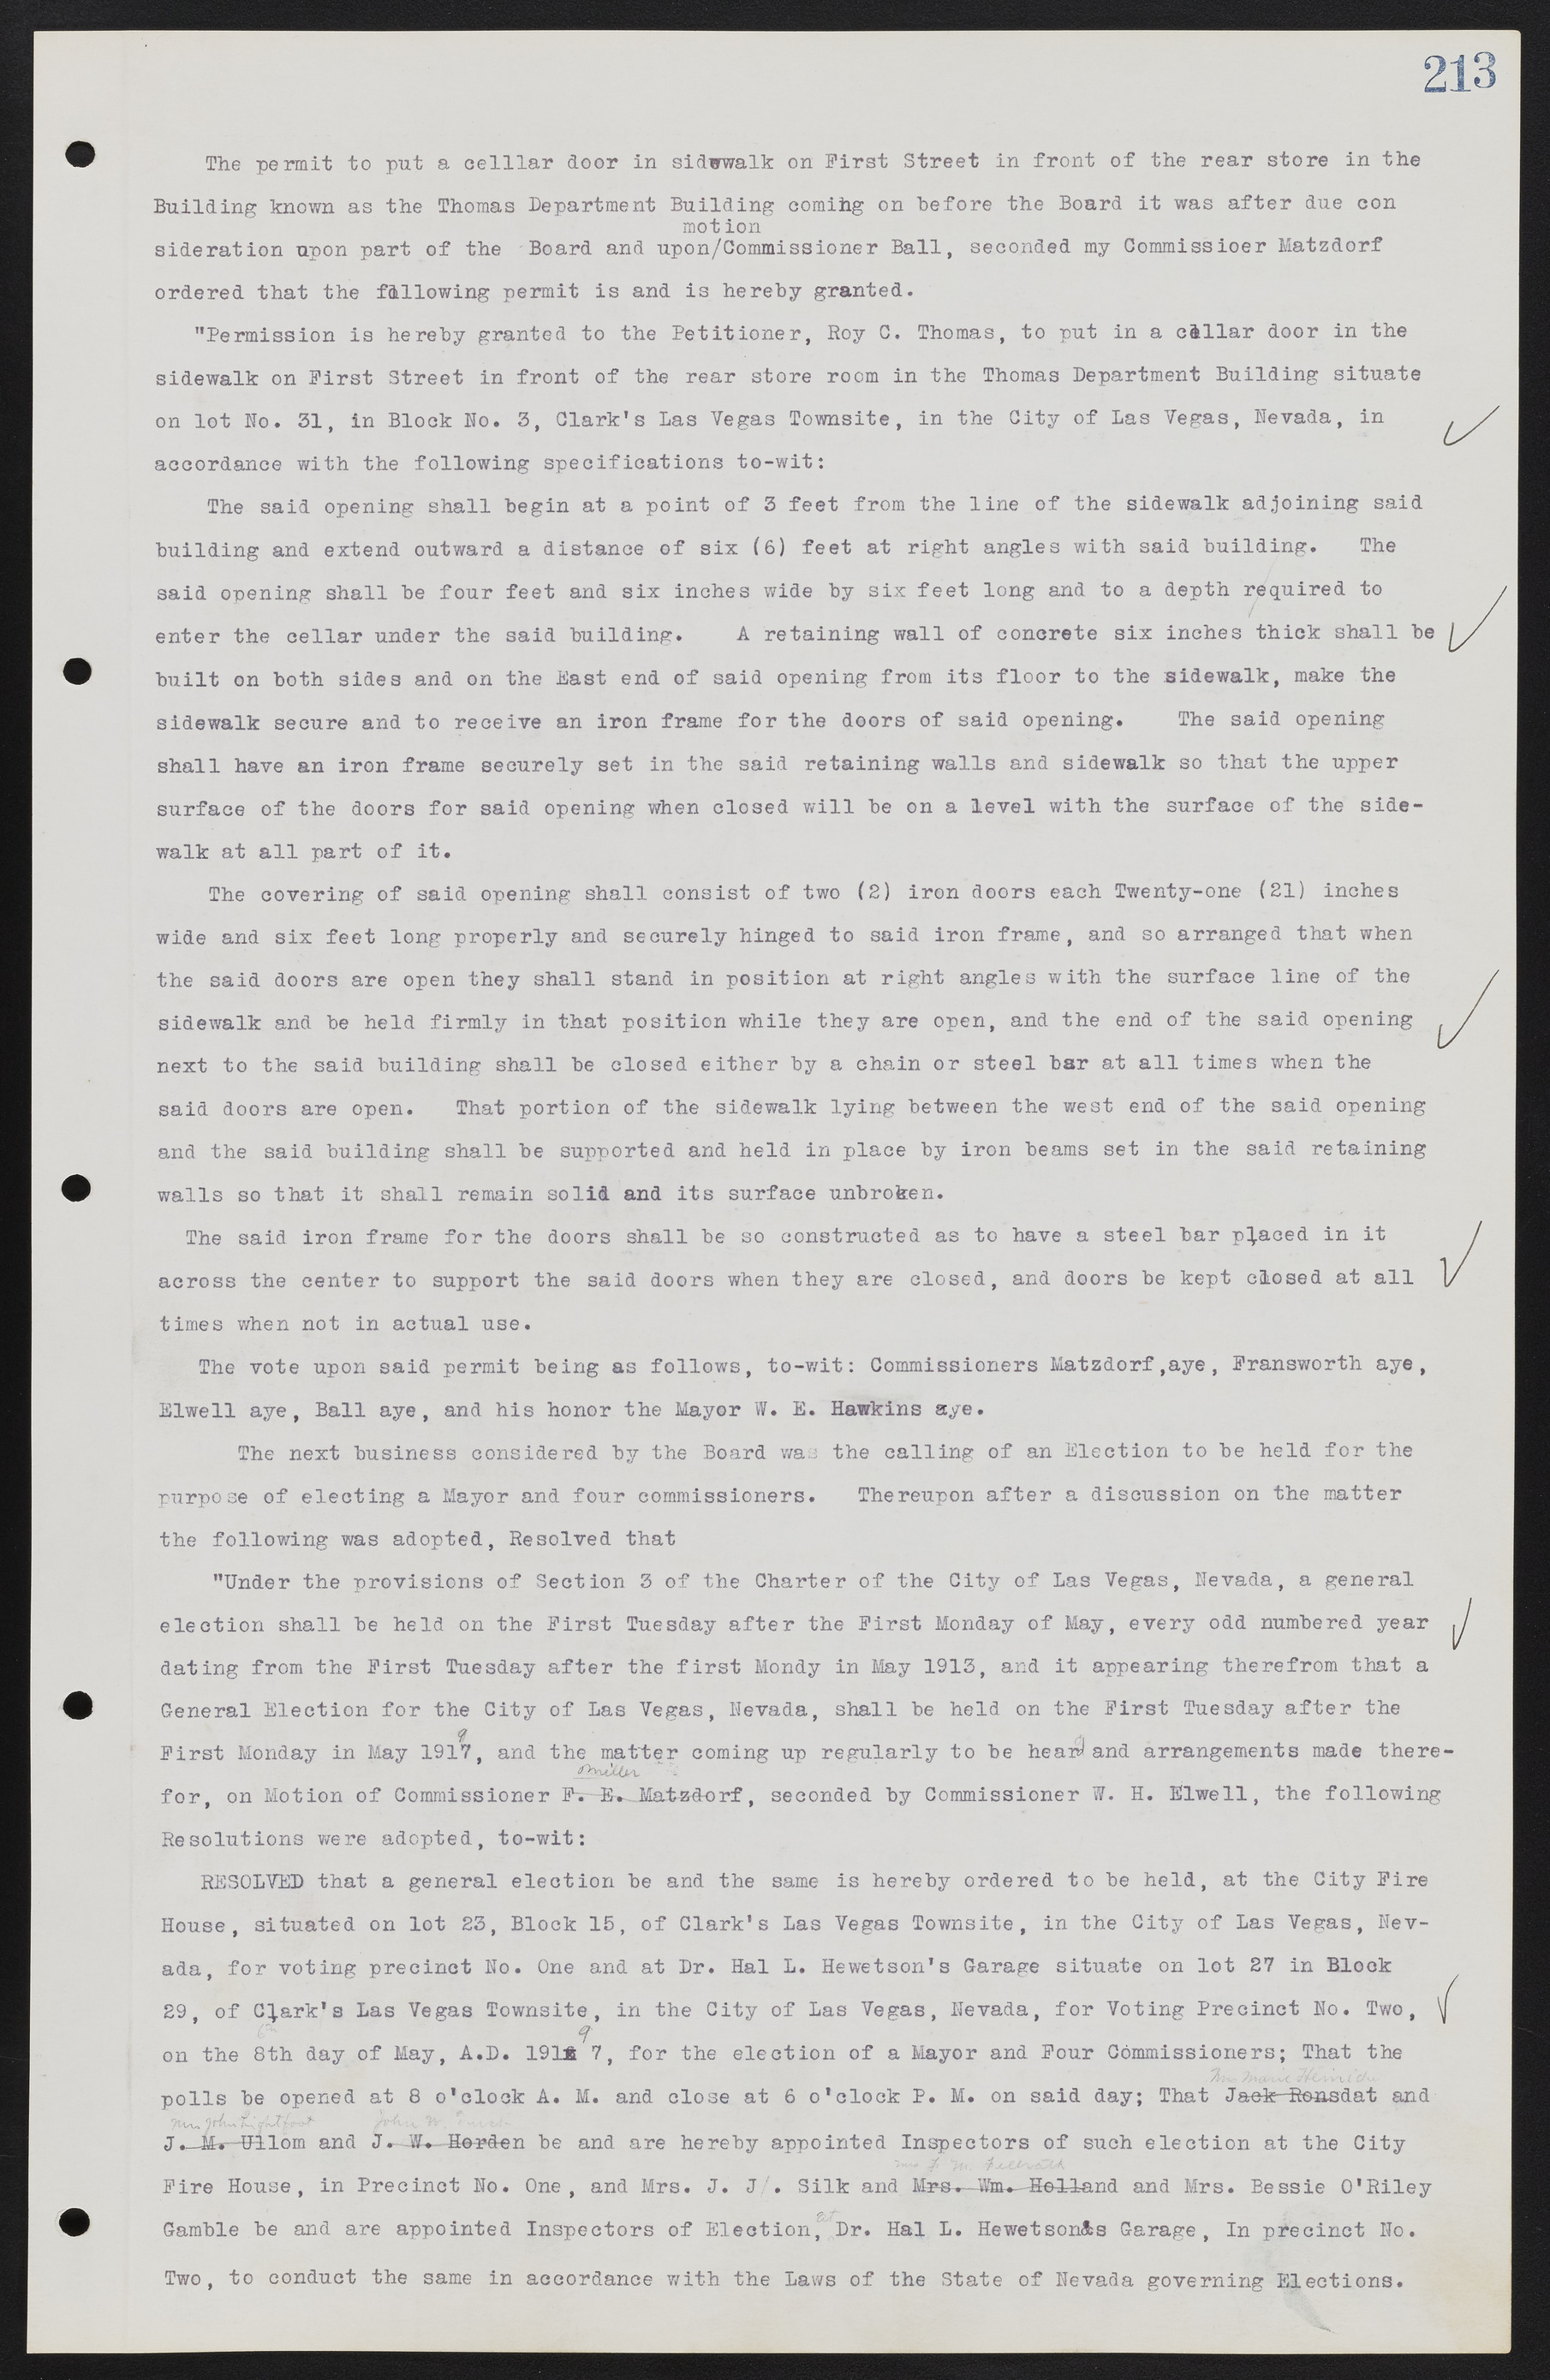 Las Vegas City Commission Minutes, June 22, 1911 to February 7, 1922, lvc000001-229